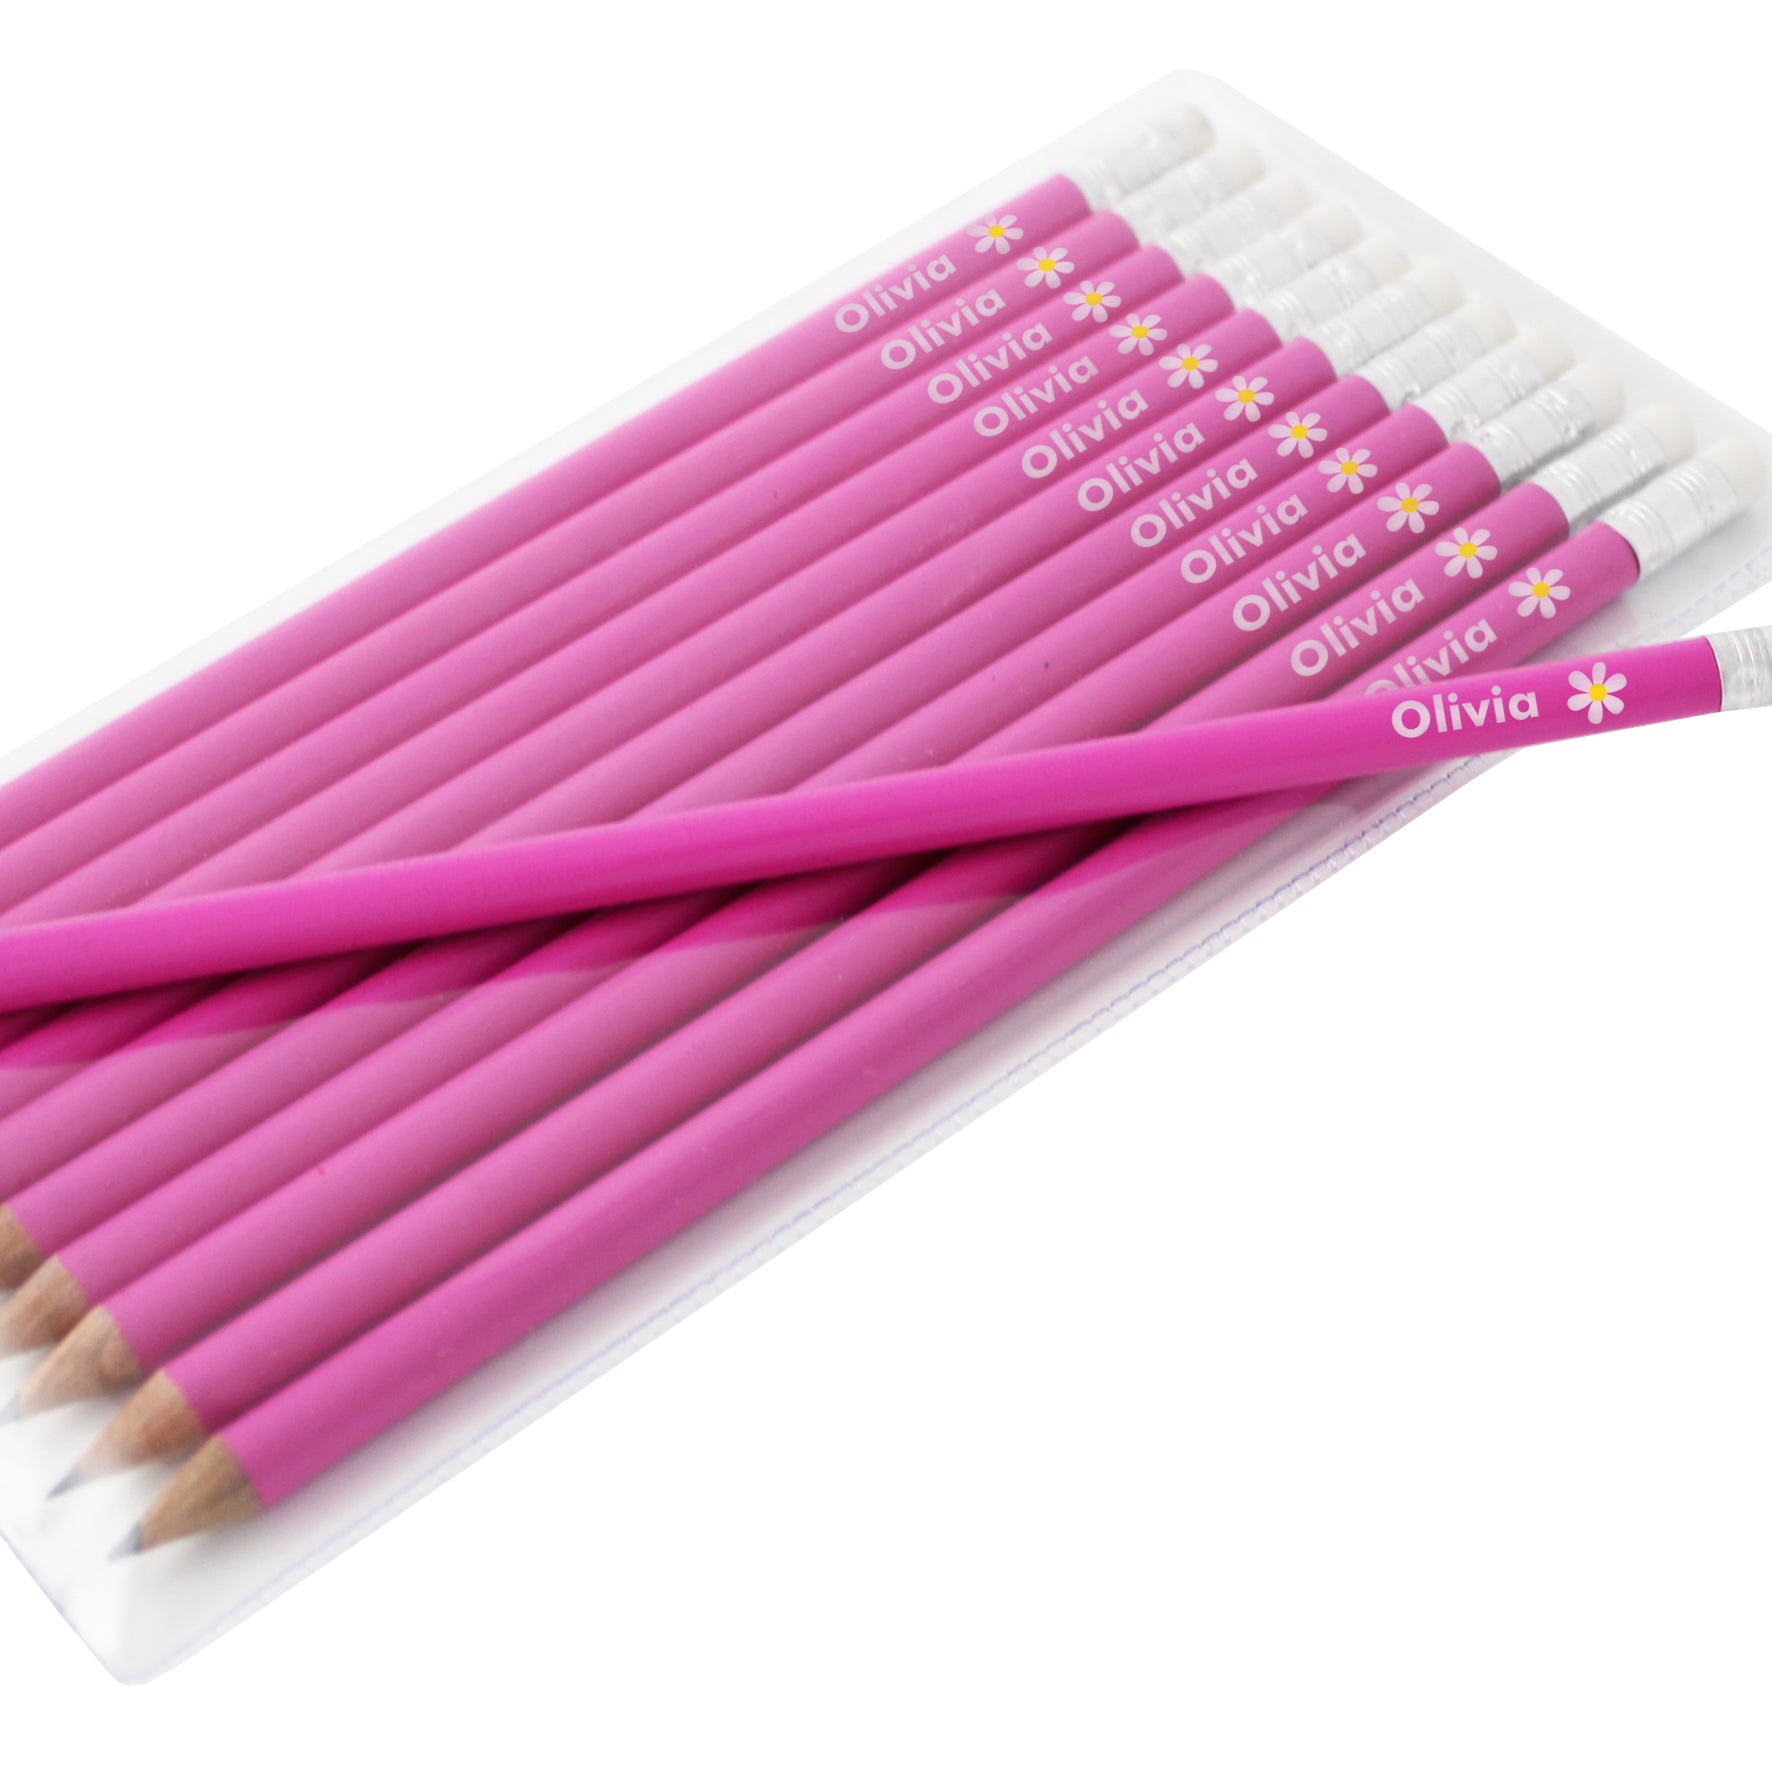 Flower motif pink pencils, personalised - Lilybet loves